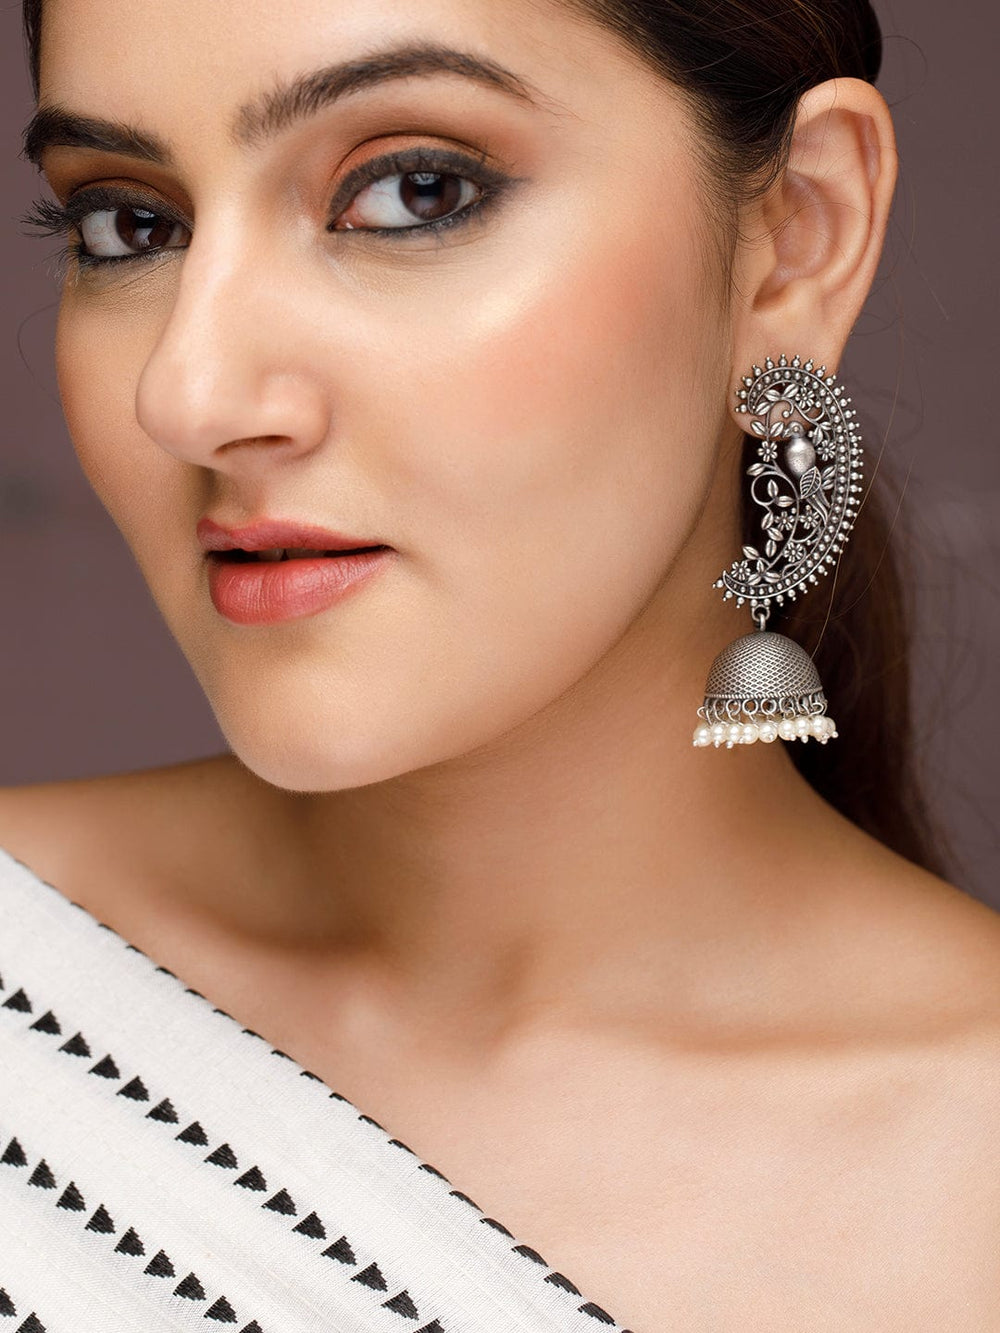 Rubans Women Silver-Toned Dome Shaped Jhumkas Earrings Earrings